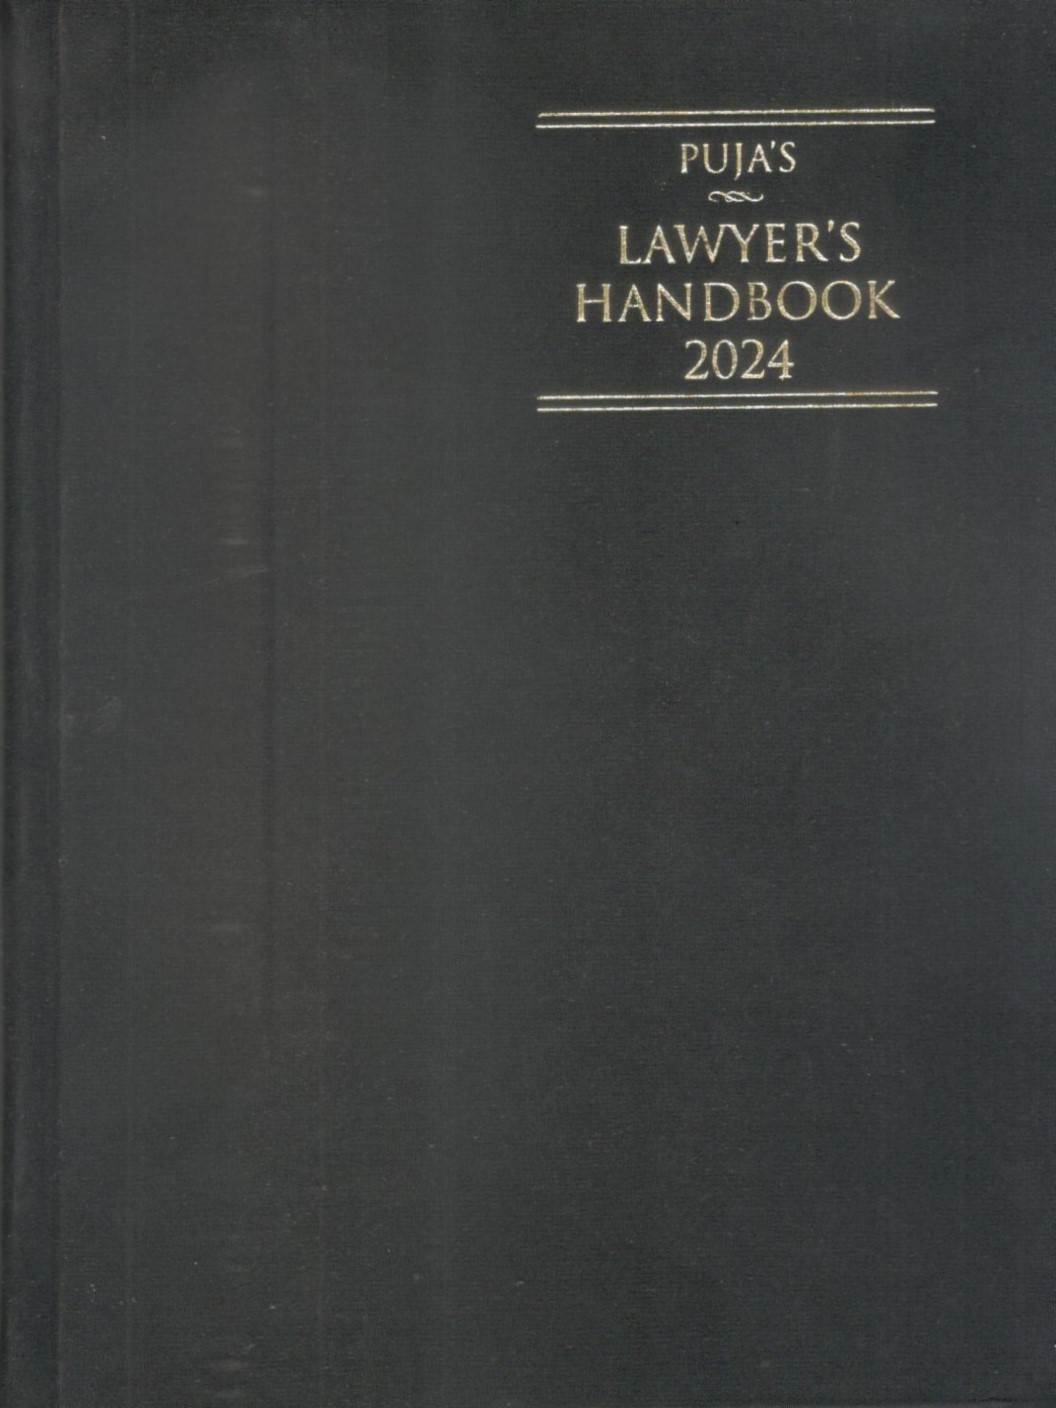 Puja’s Lawyer’s Handbook 2024 - Black Big Size Hardbound